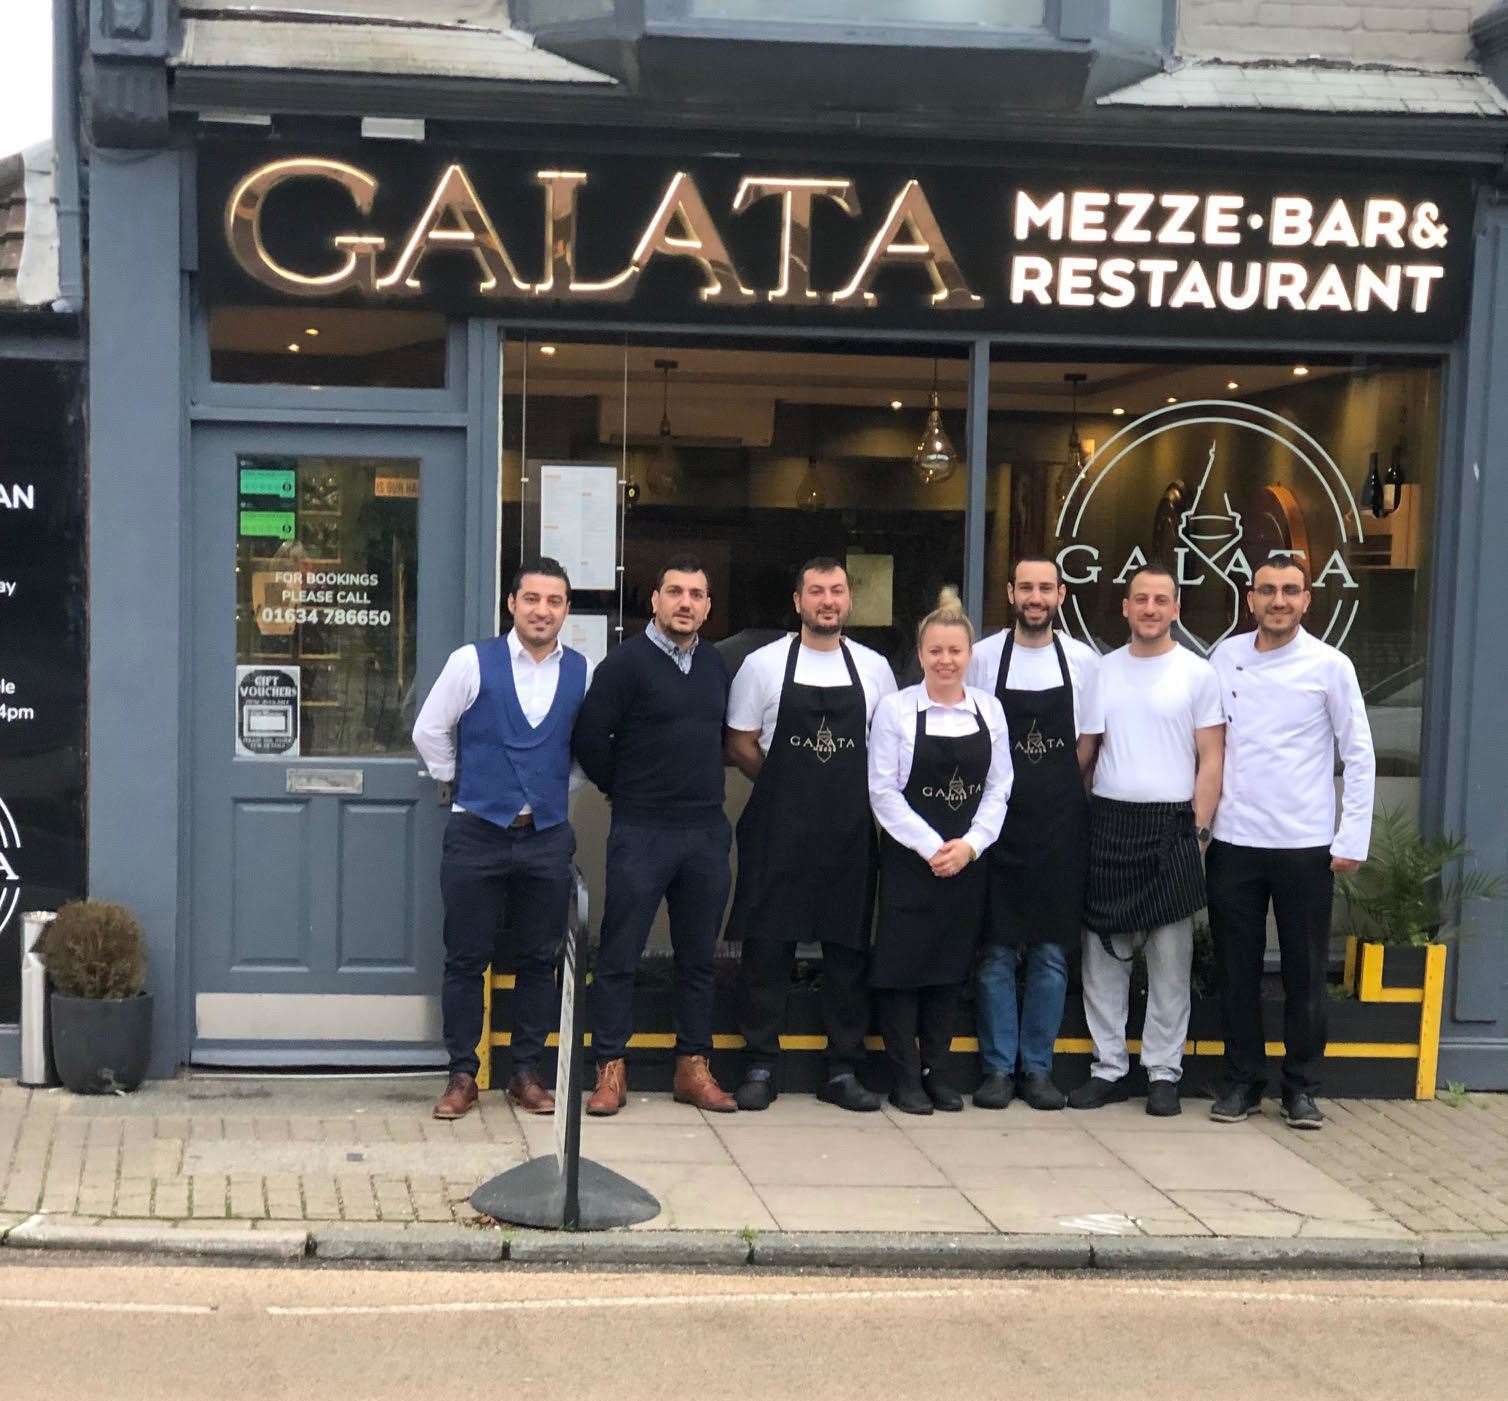 Staff outside Galata Mezze Bar & Restaurant in Rainham High Street